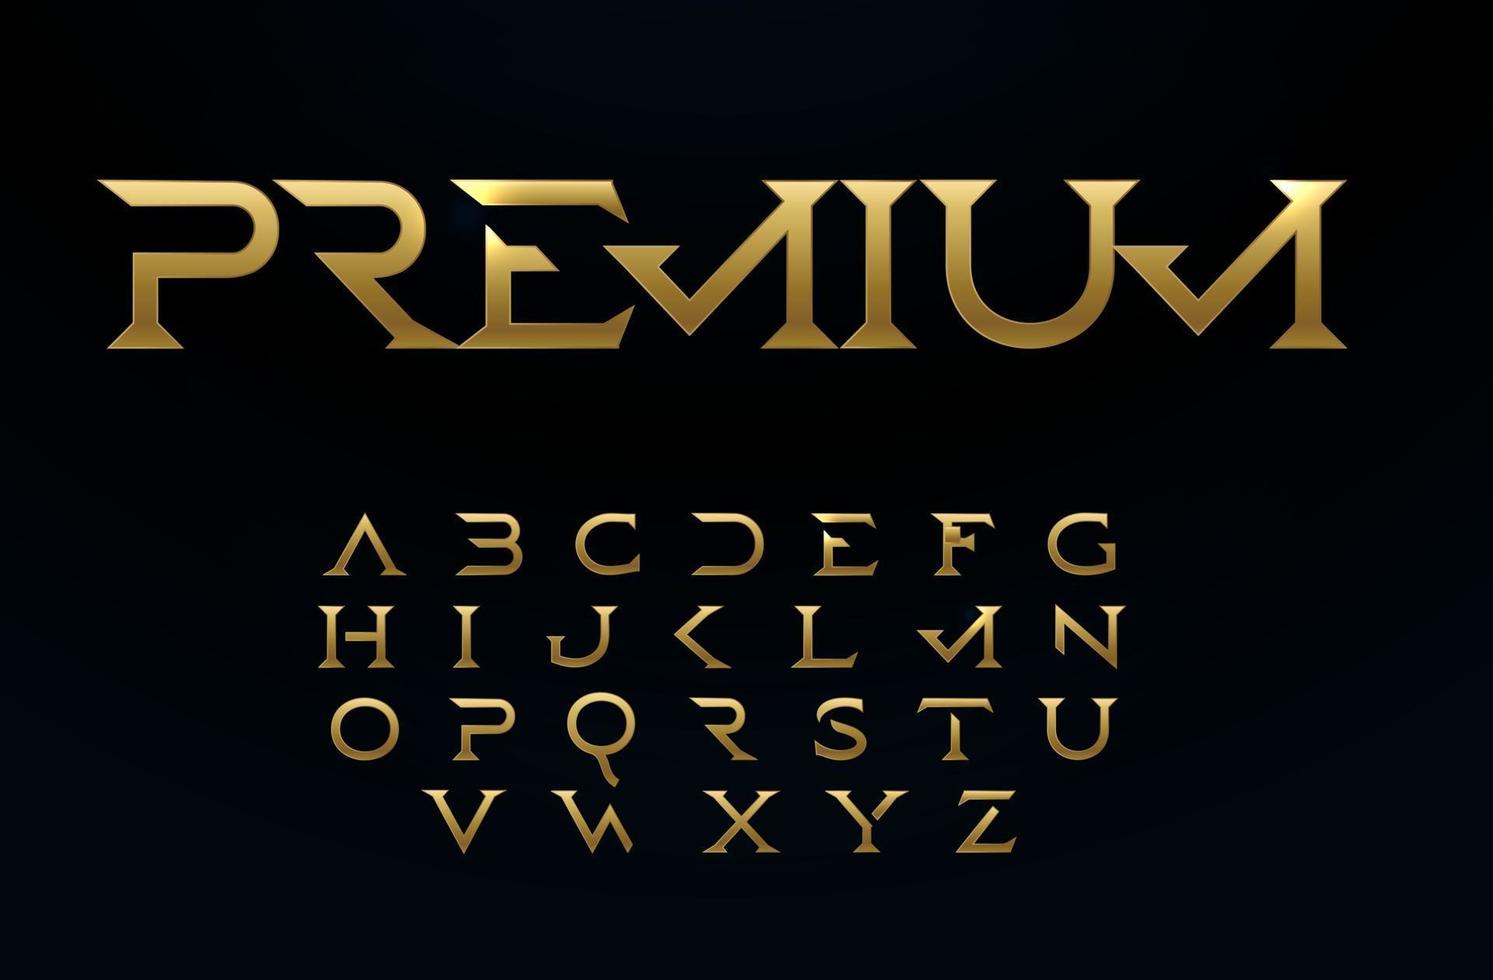 Premium alphabet, royal style golden font, modern type for elite logo, headline, monogram, creative lettering and beautiful typography. Minimal style serif letters, vector typographic design.